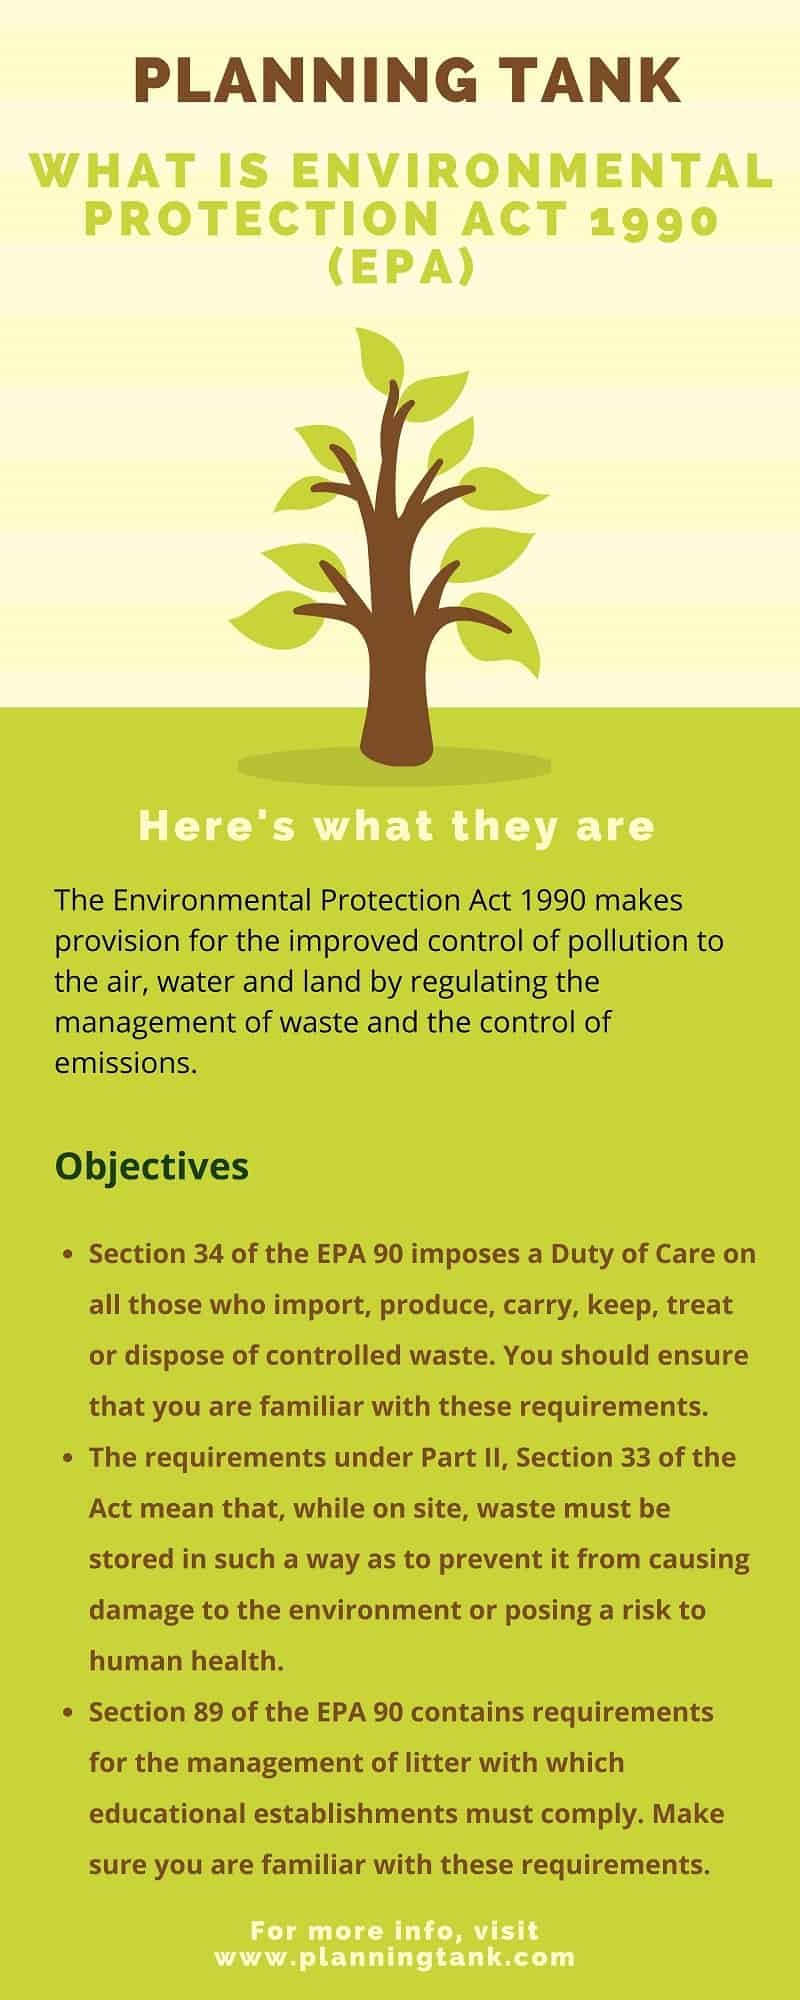 Environmental Protection Act 1990 - Planning Tank